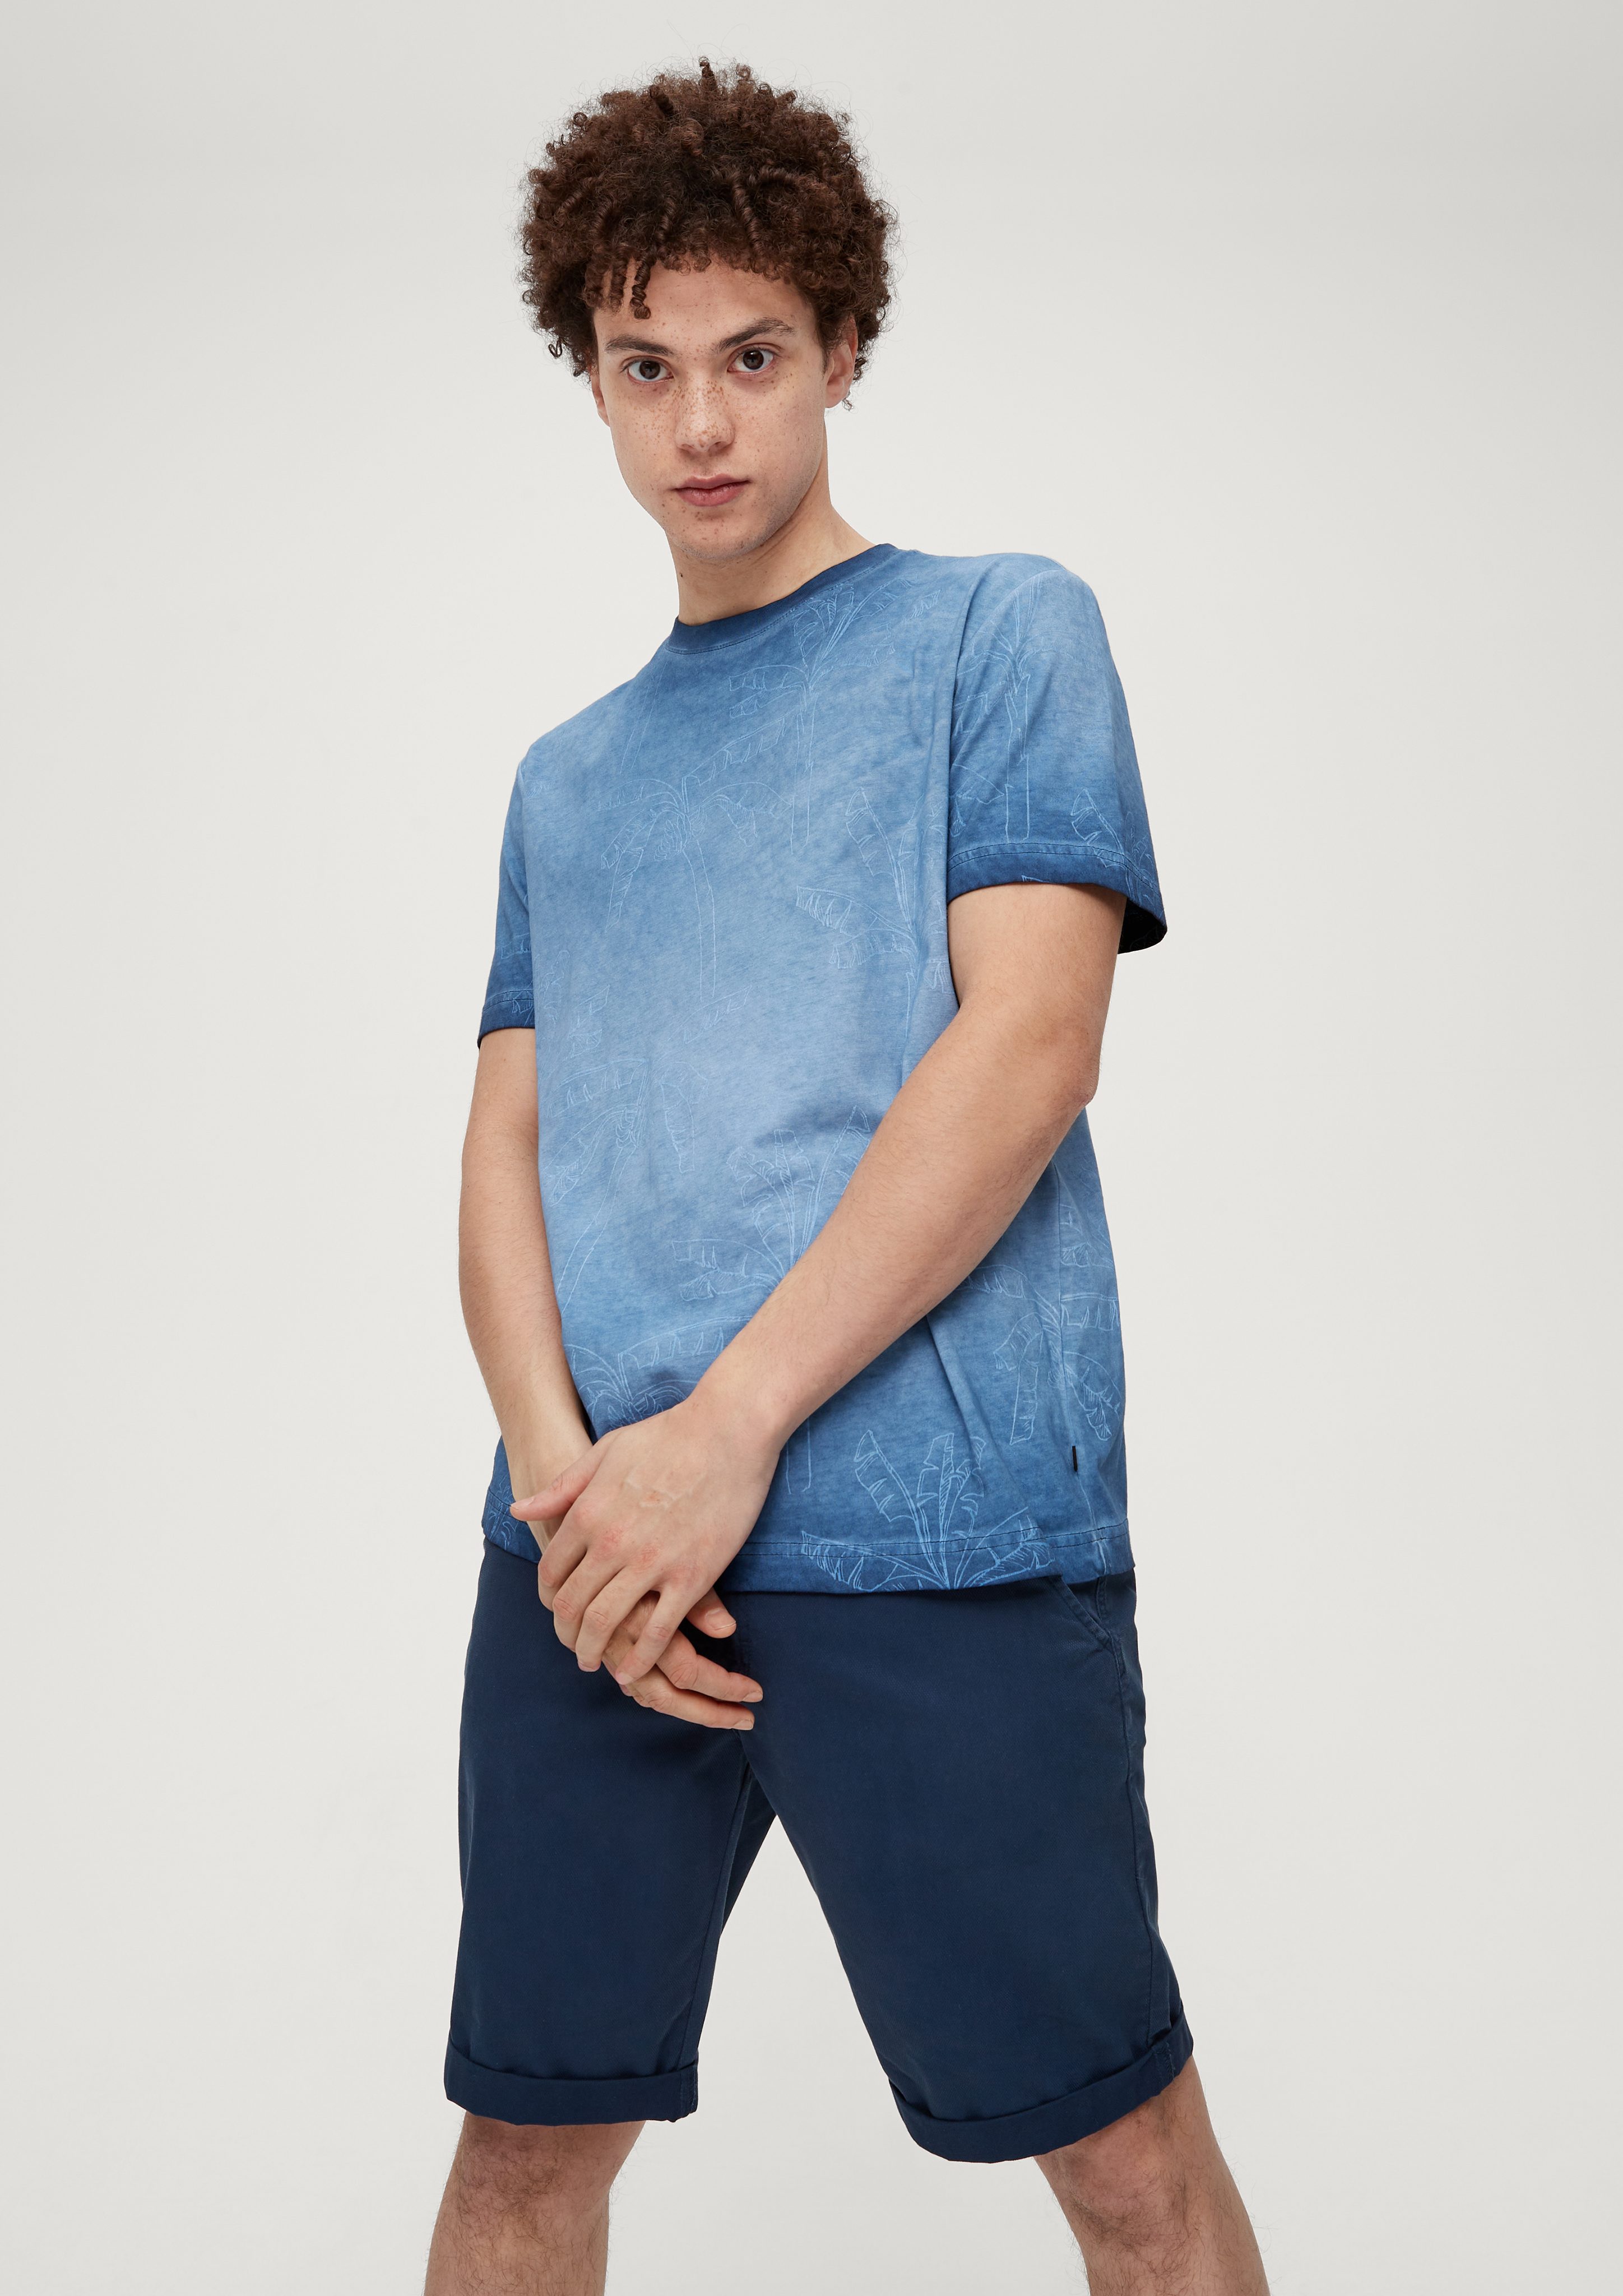 QS Kurzarmshirt T-Shirt reiner aus tiefblau Baumwolle